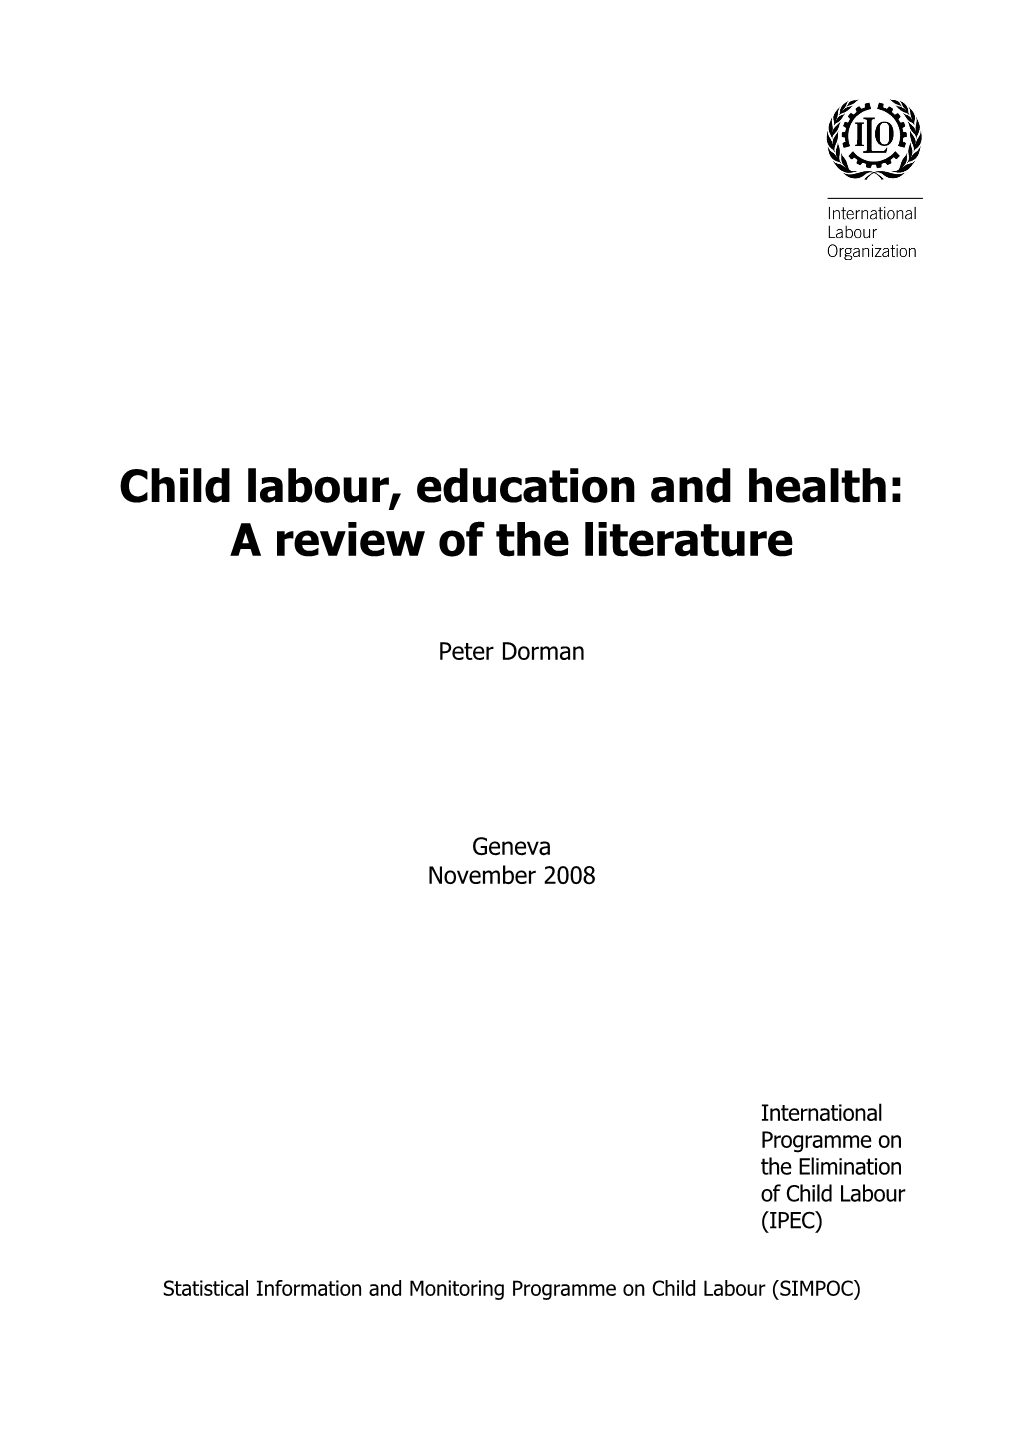 International Programme on the Elimination of Child Labour (IPEC)